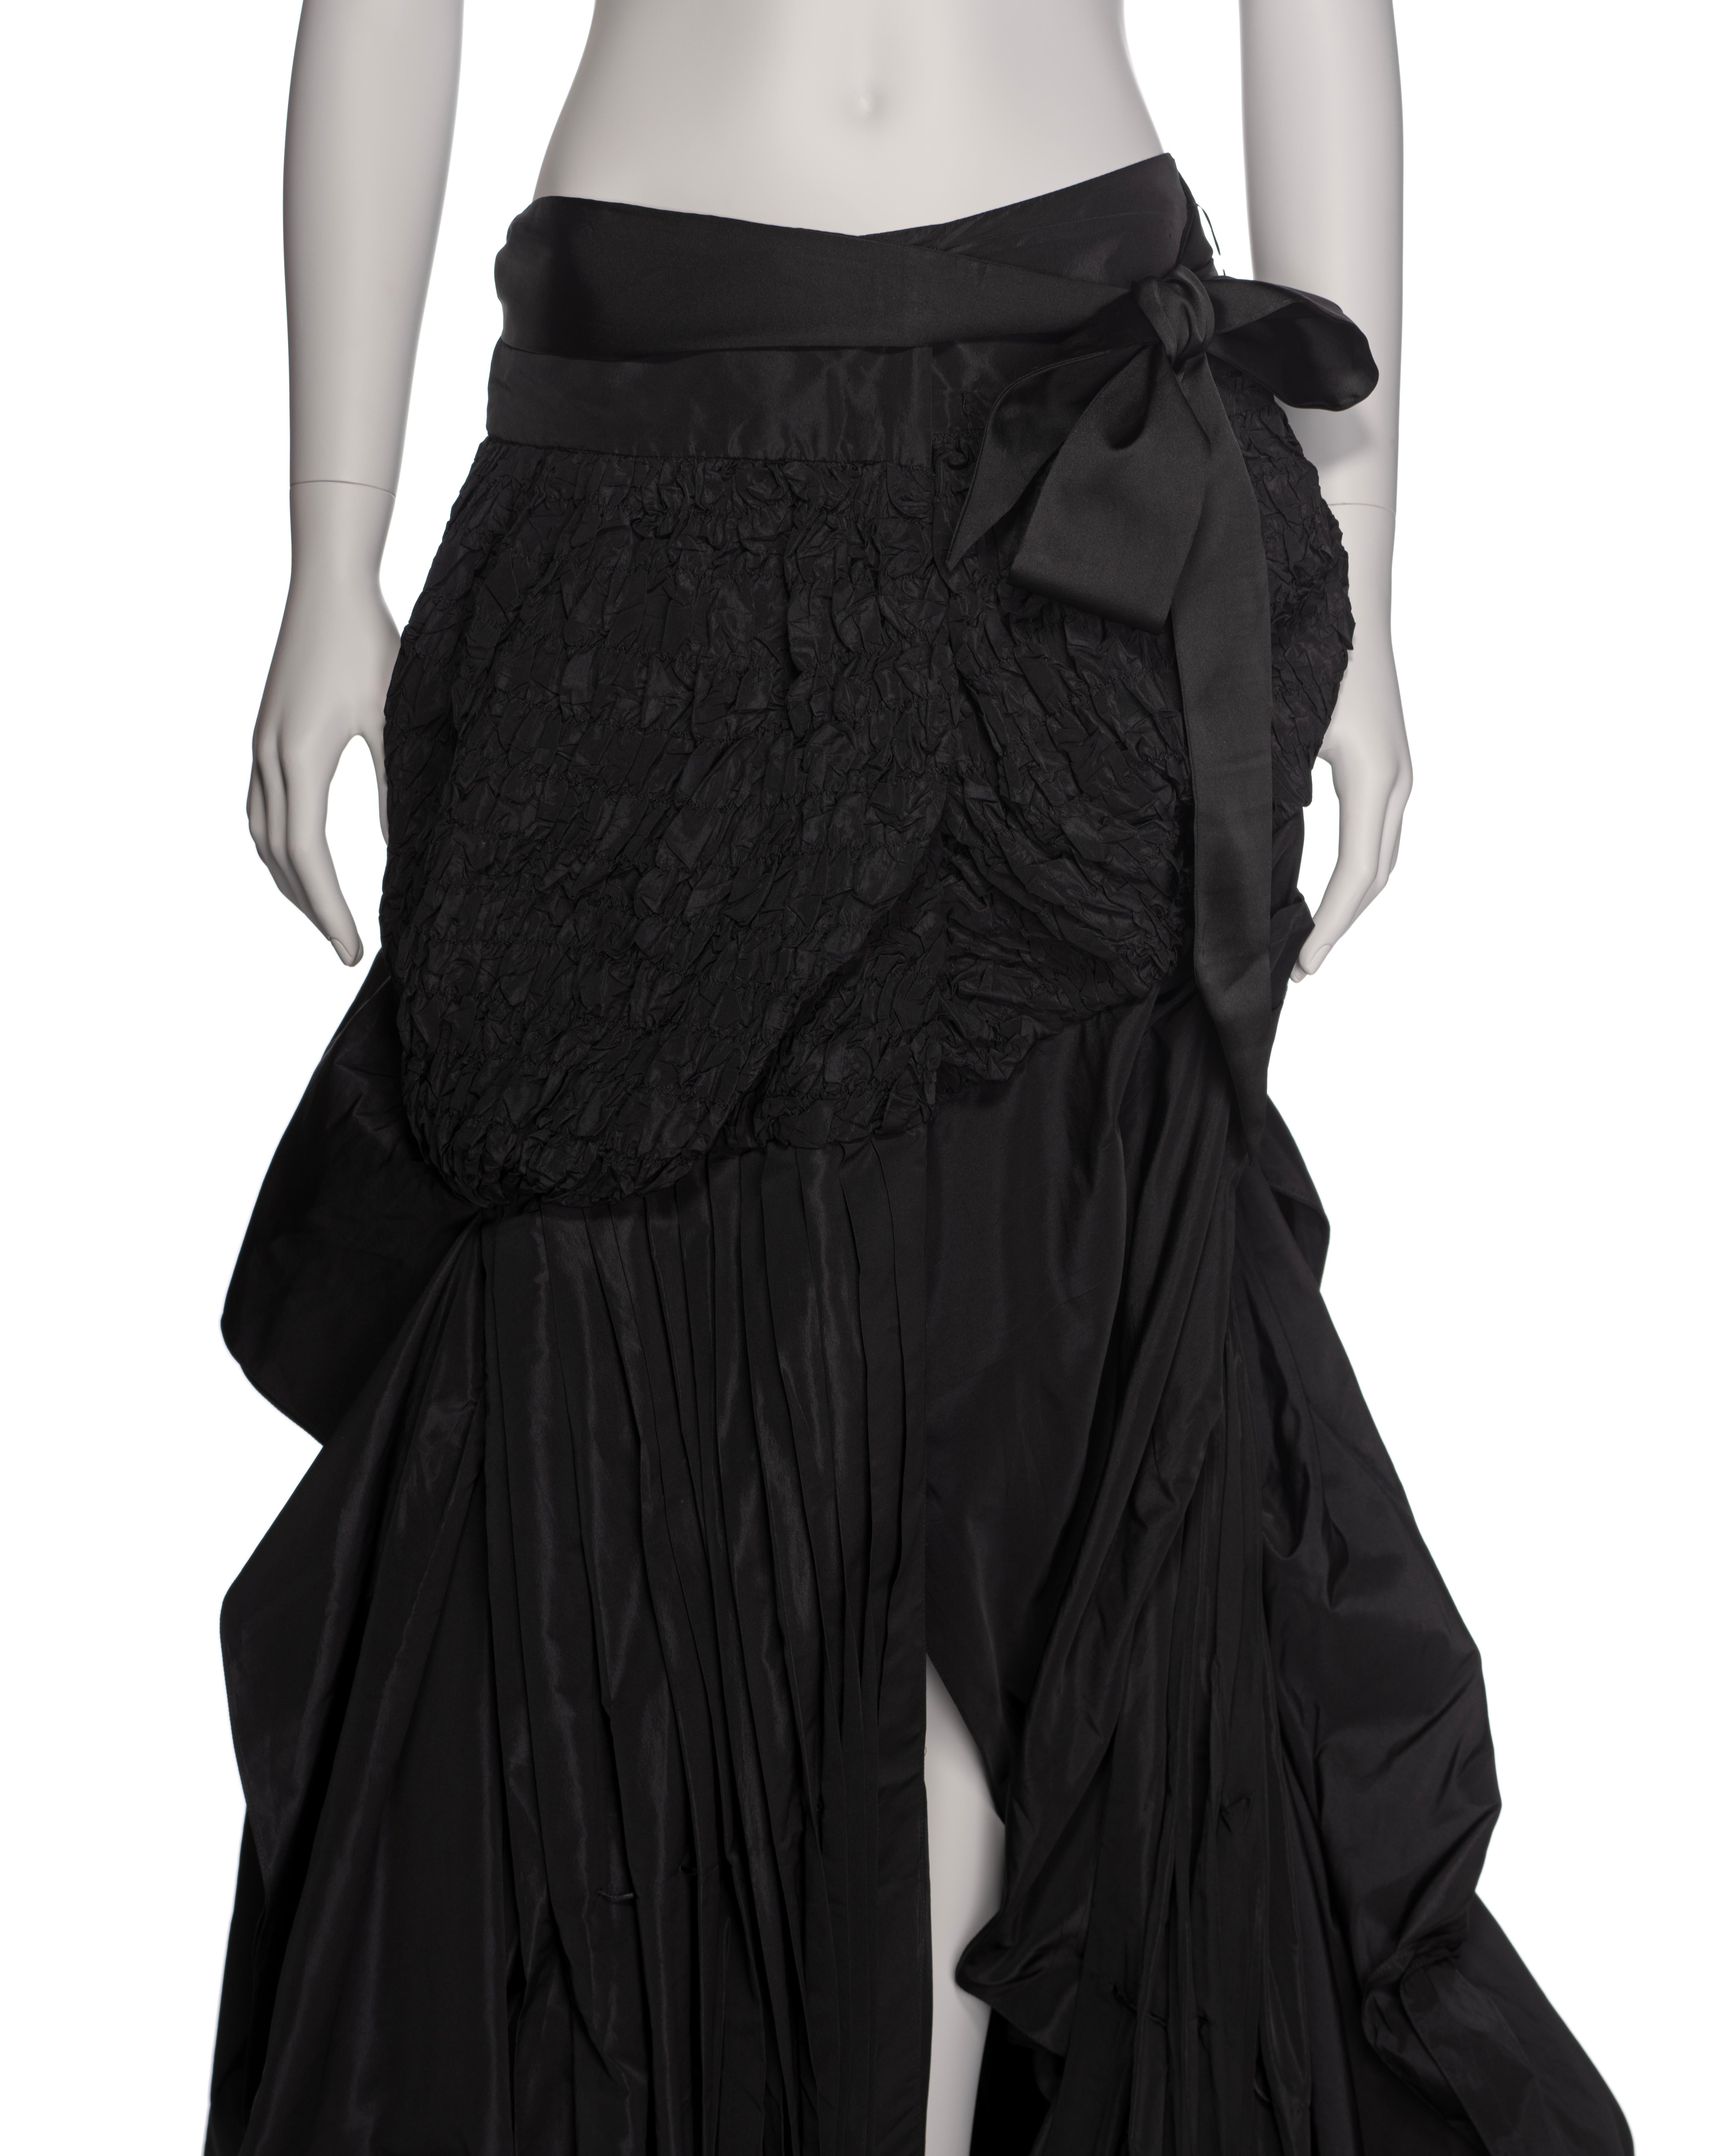 Yves Saint Laurent by Tom Ford Black Silk Taffeta Trained Evening Skirt, FW 2001 For Sale 1